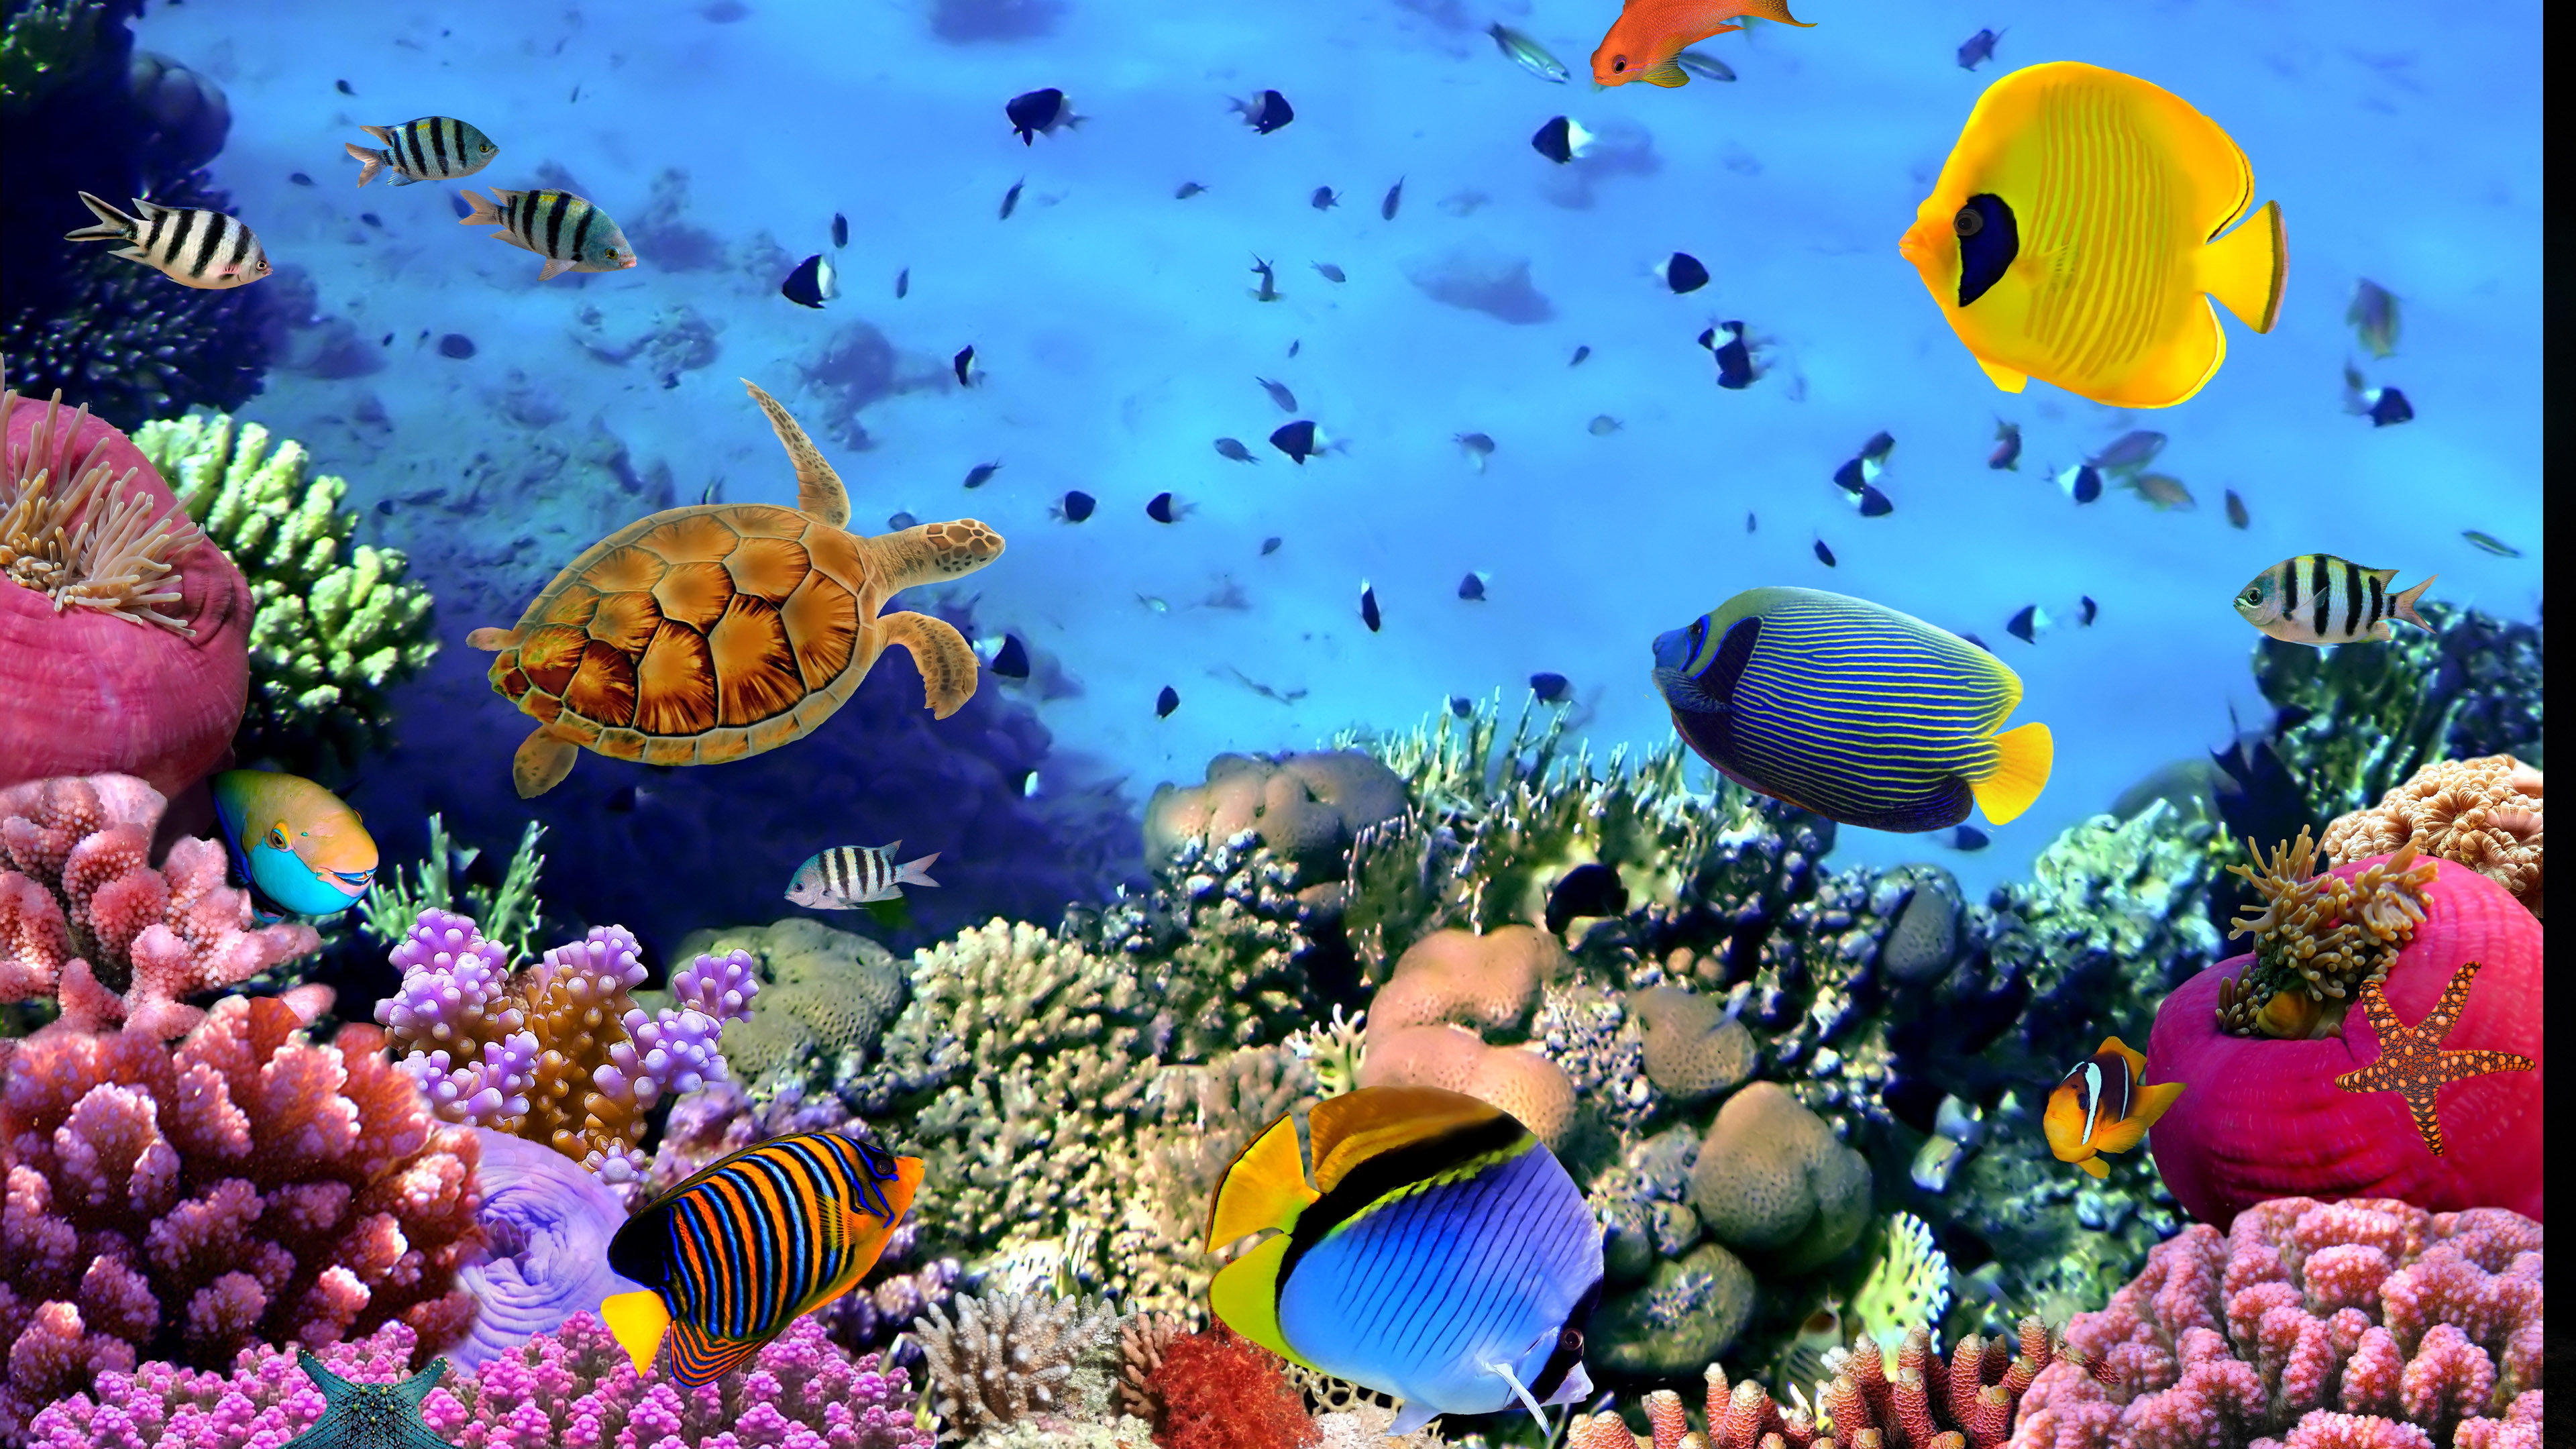 3840x2160, Aquarium Wallpaper For Windows 10 Data - Underwater Desktop  Background - 3840x2160 Wallpaper 